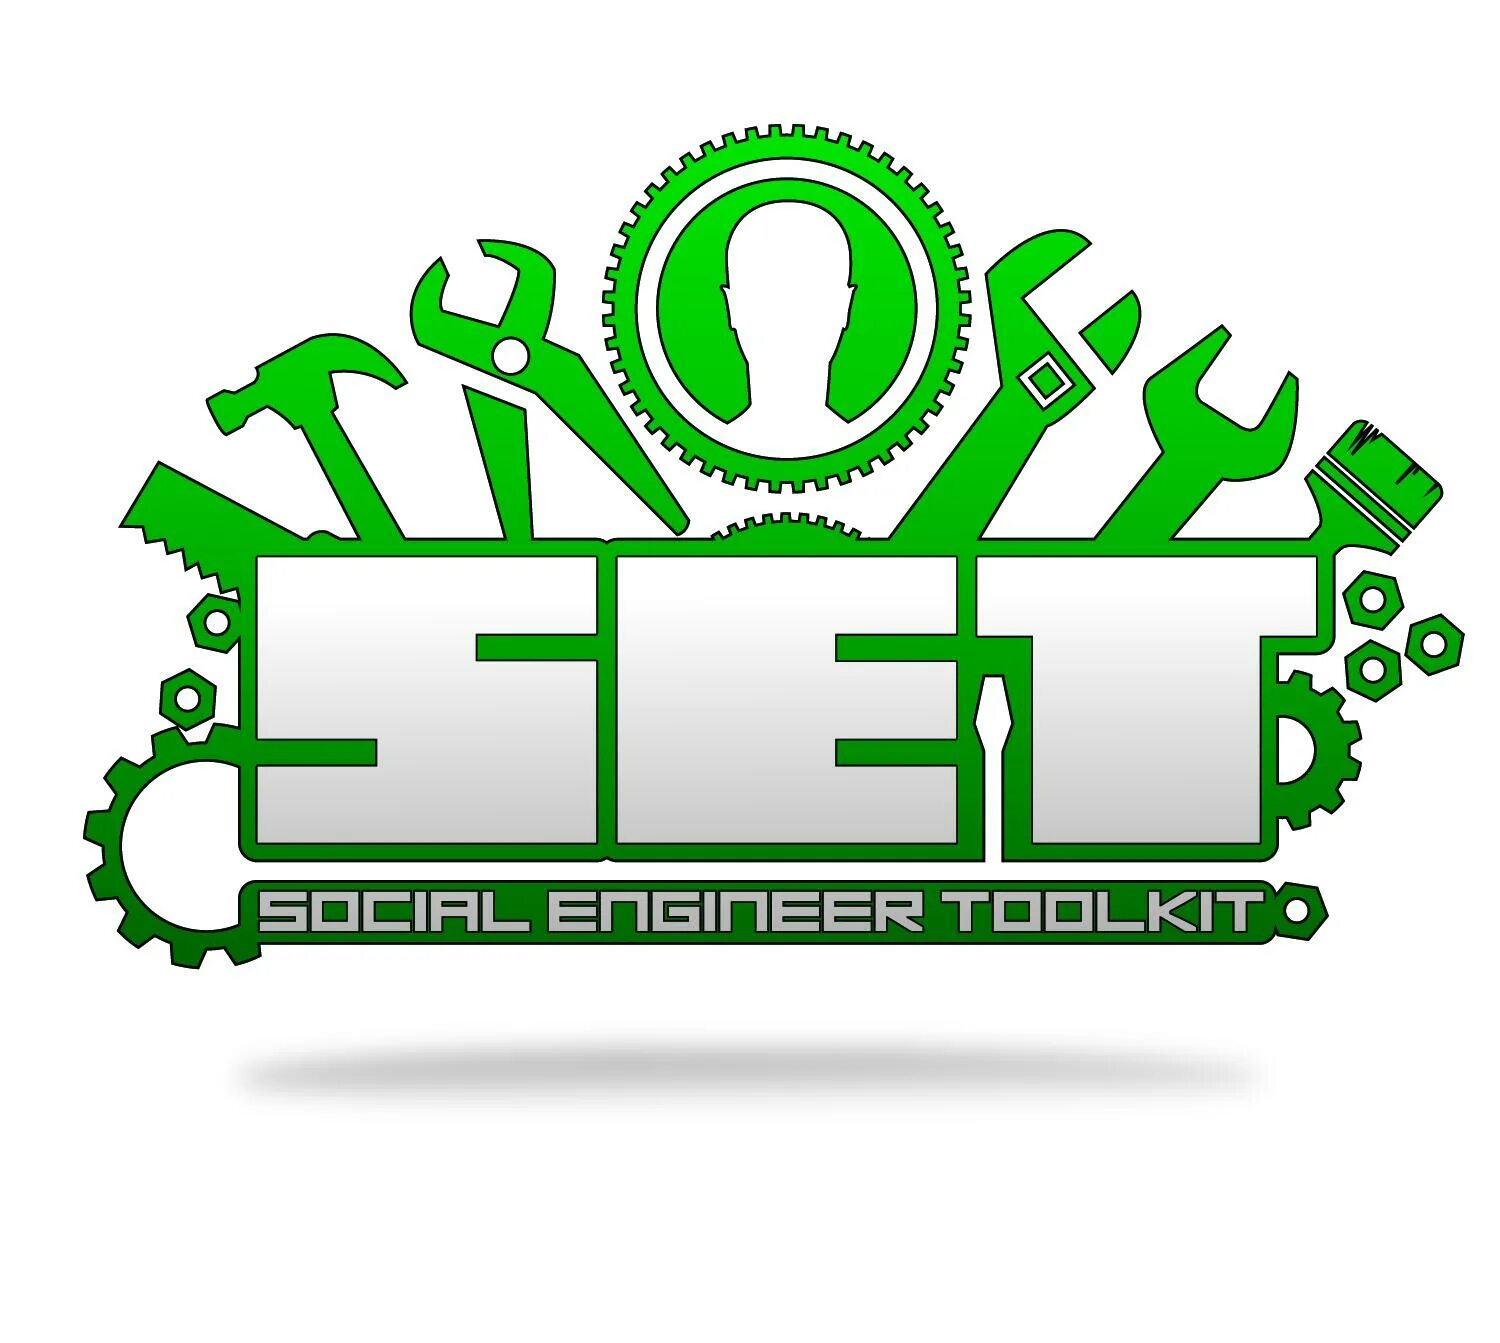 Www society. Social-Engineer Toolkit. Social Engineering Toolkit. Toolkit логотип. Social Engineering Toolkit logo.